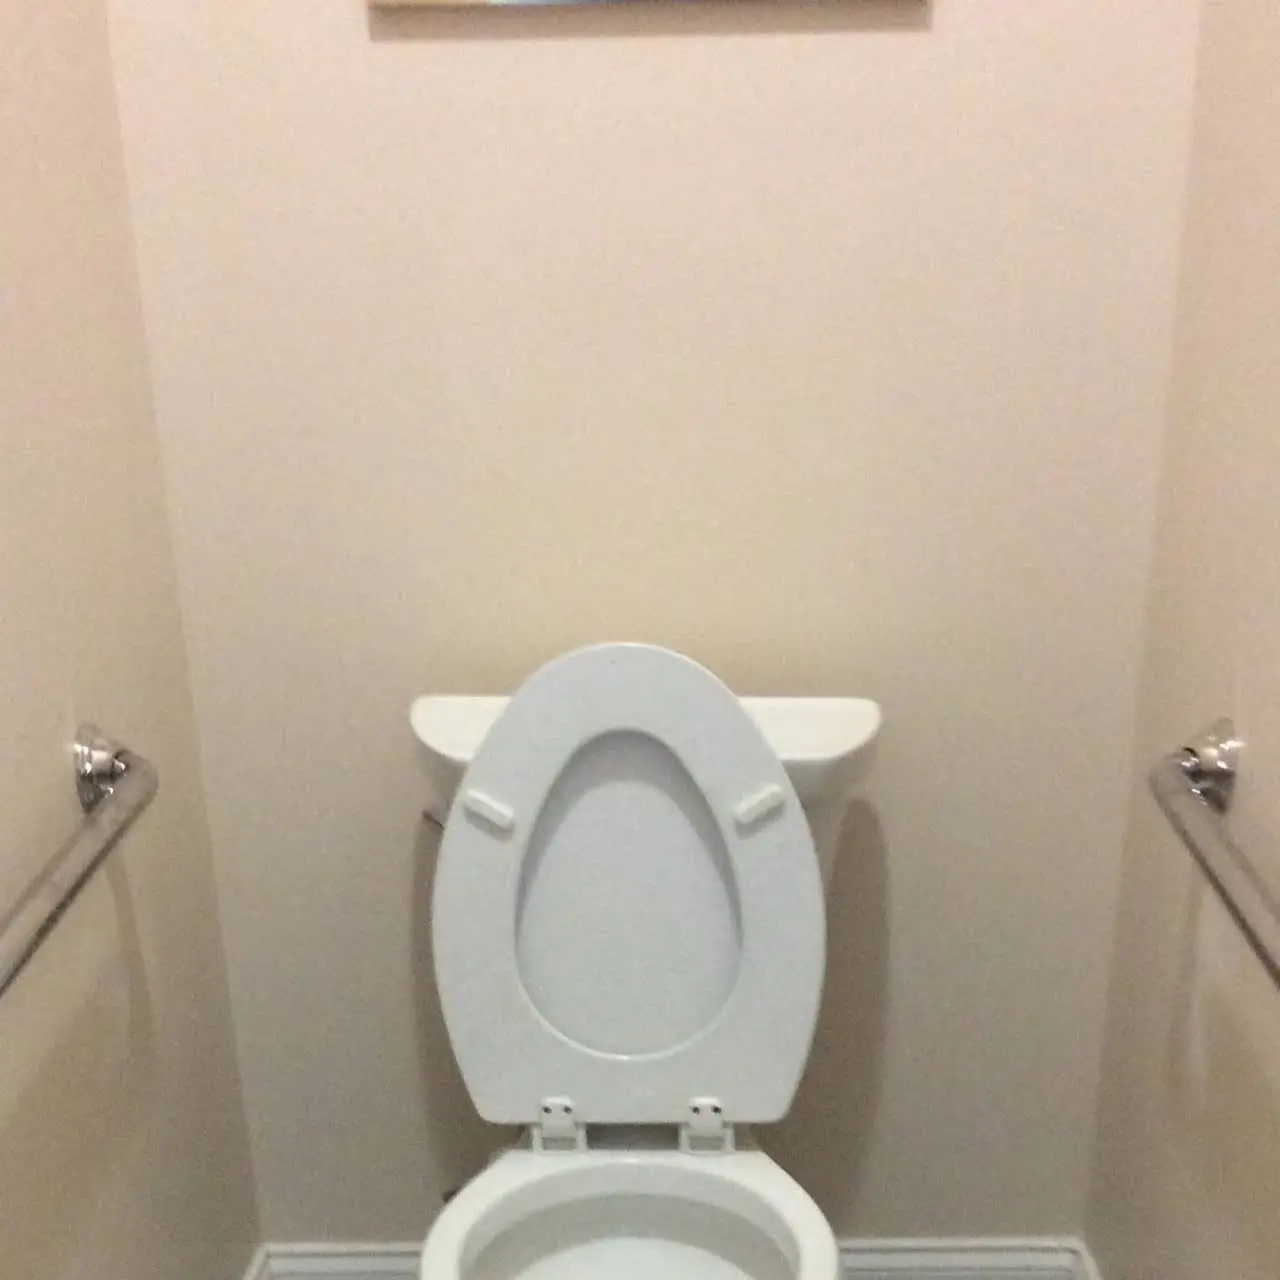 Kohler toilet Instalation